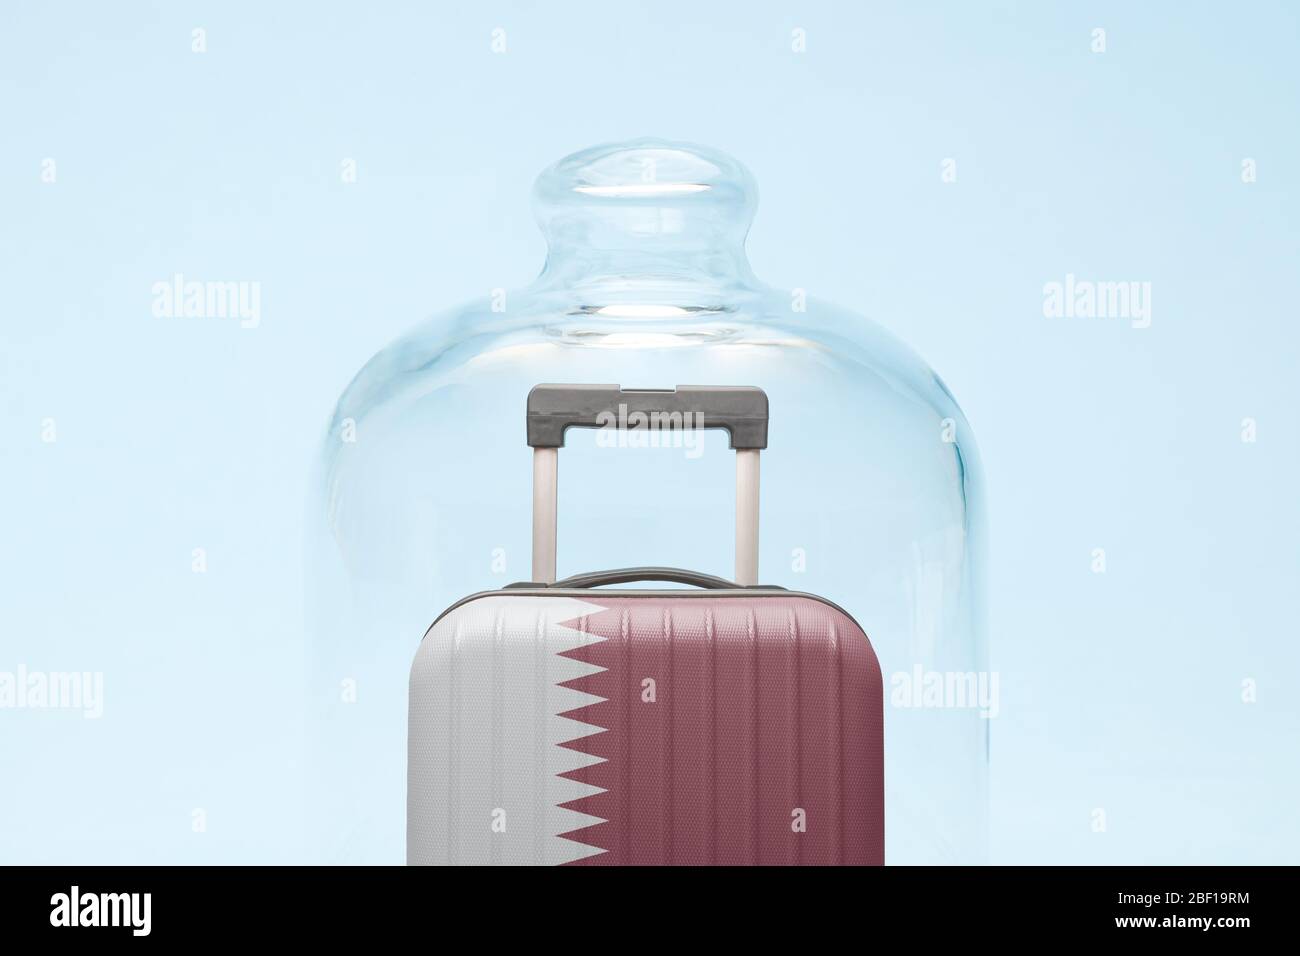 Suitcase with Qatar flag design in quarantine minimal creative coronavirus travel restriction concept. Stock Photo